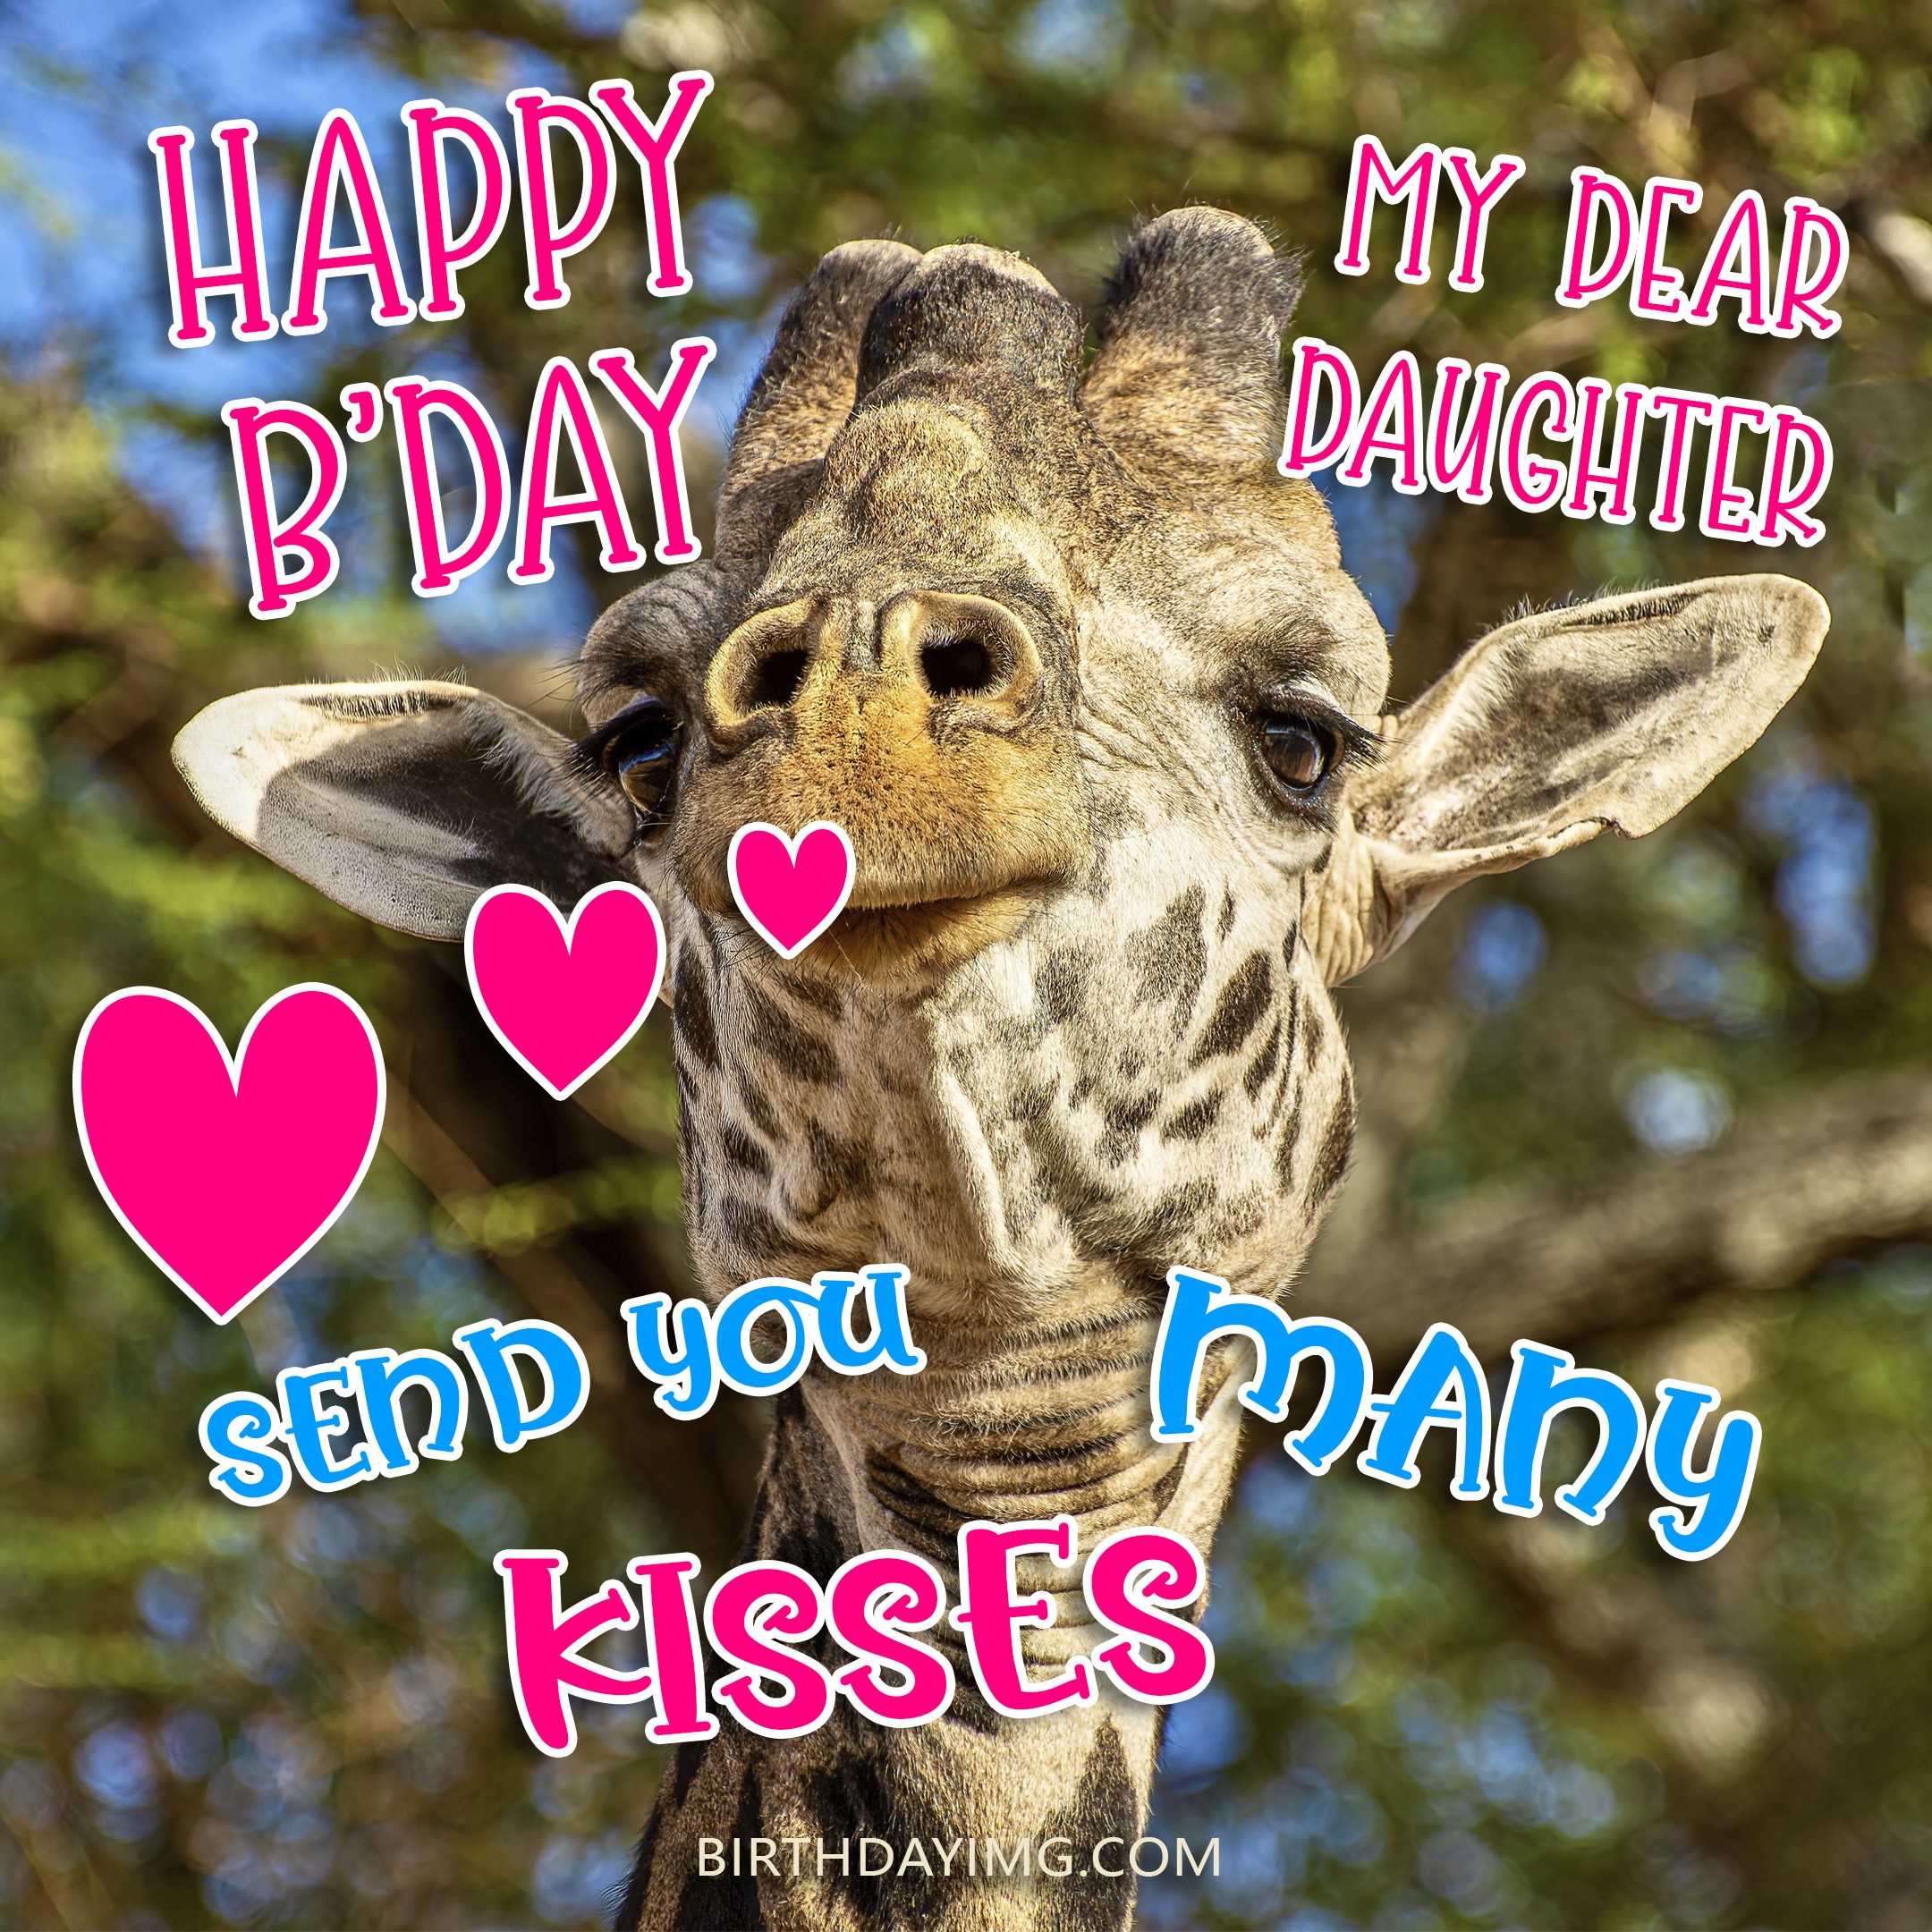 Free Happy Birthday Image For Daughter With Cute Giraffe - birthdayimg.com